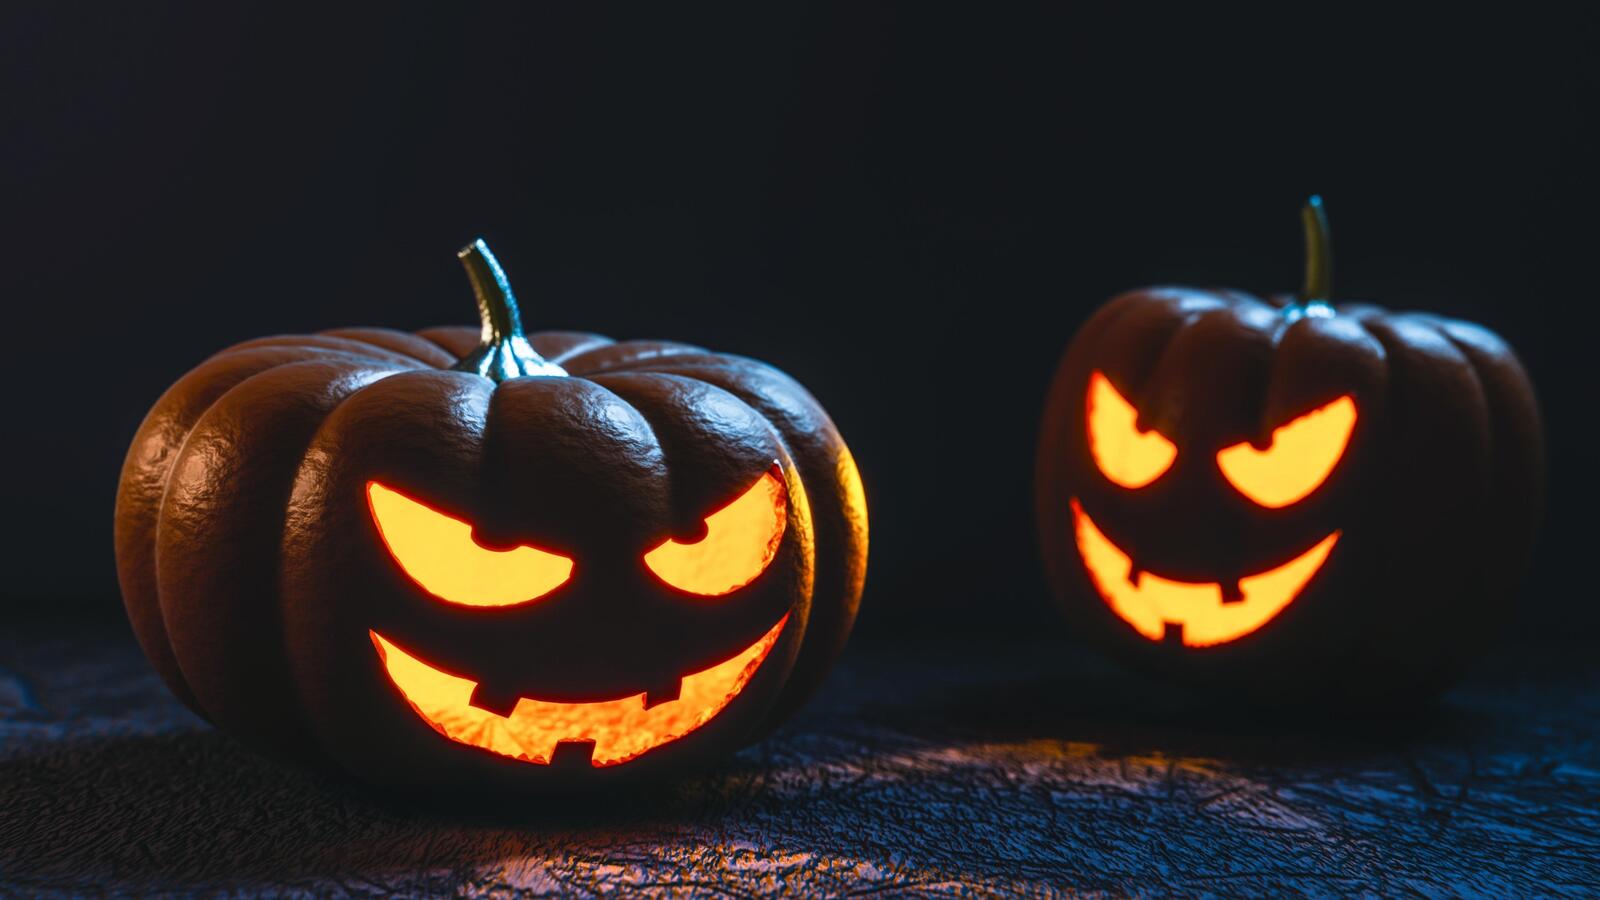 Wallpapers smiling creepy pumpkins halloween 2021 on the desktop